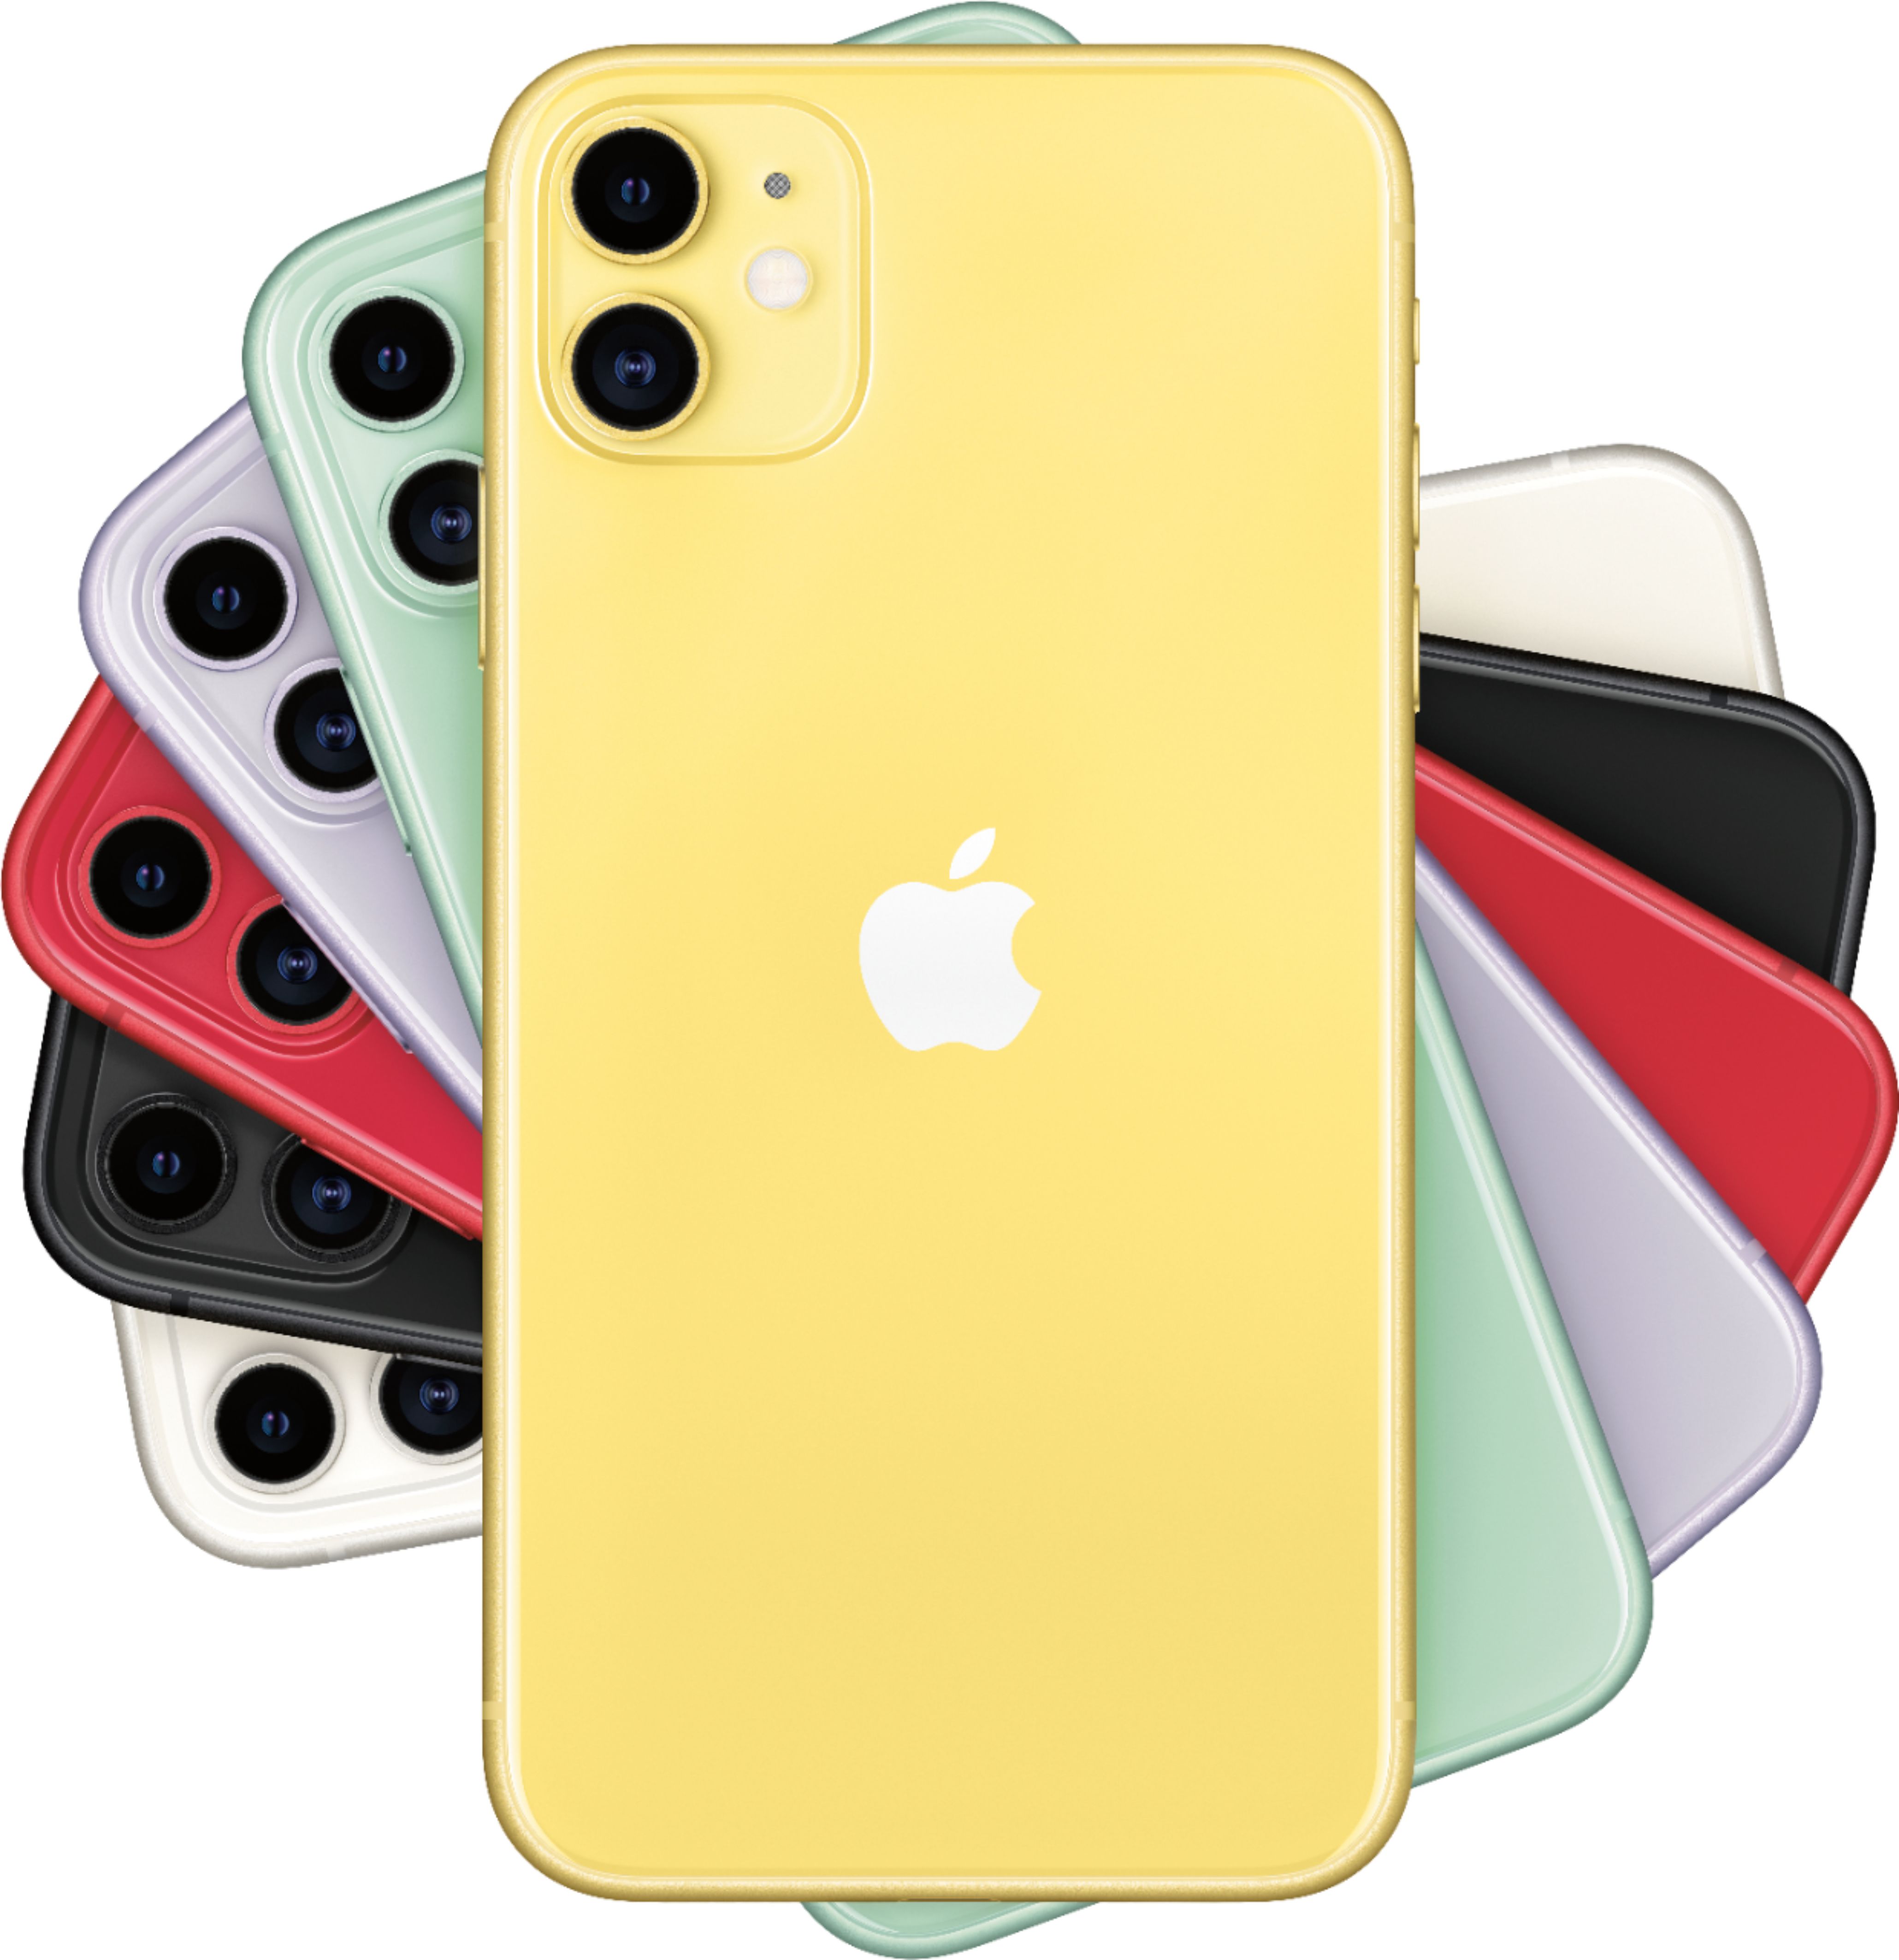 Apple Iphone 11 64gb Yellow Sprint Mwla2ll A Best Buy